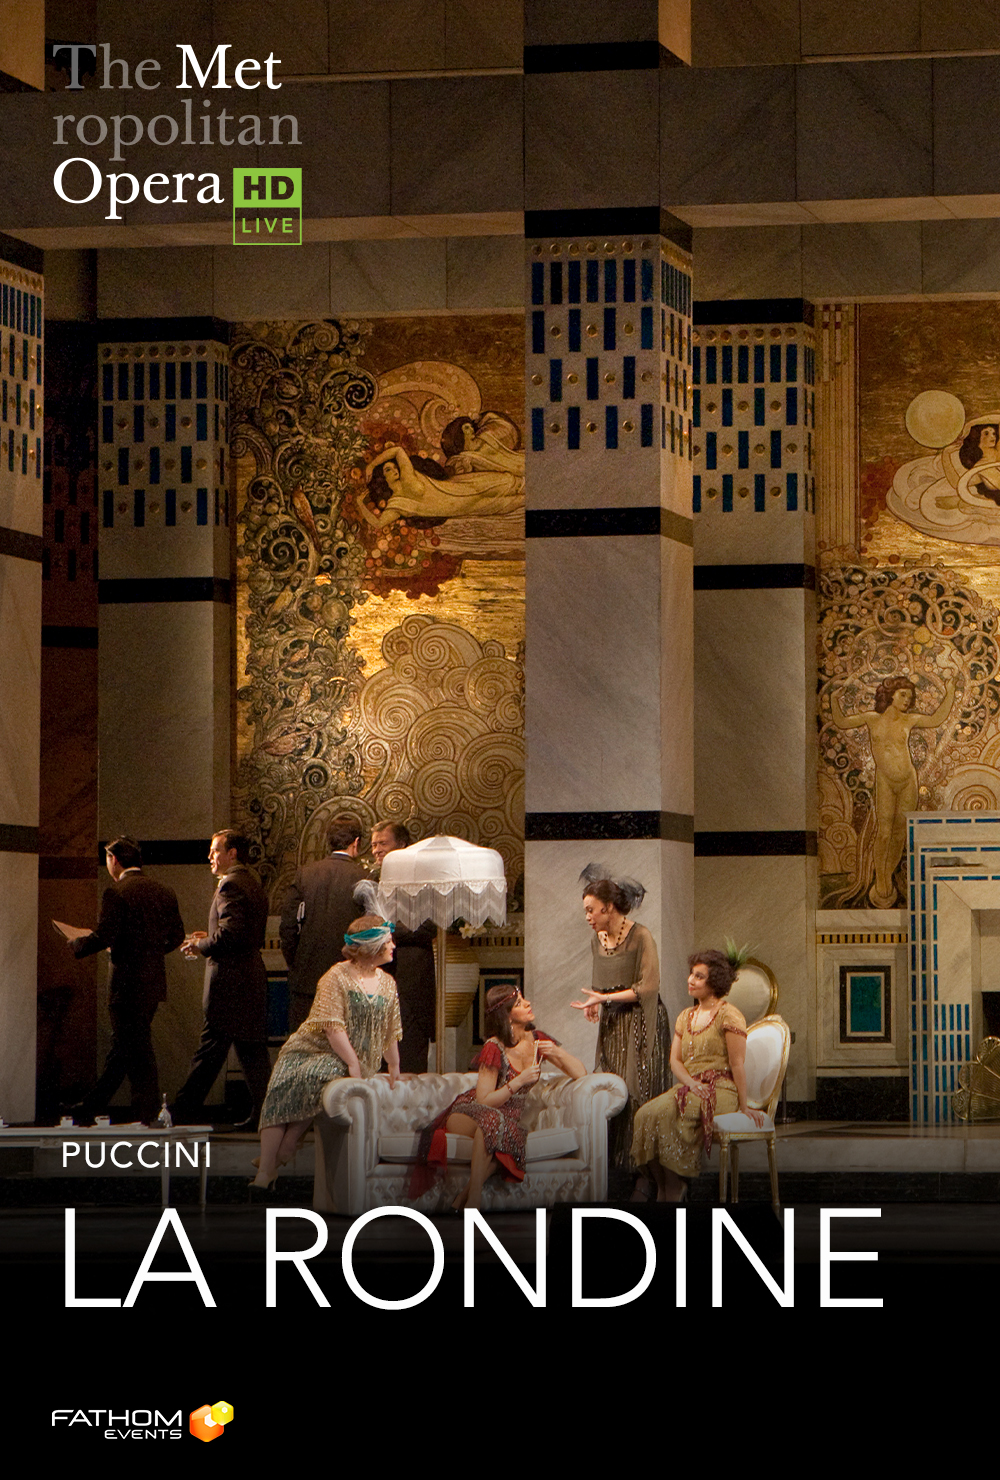 The Metropolitan Opera: La Rondine